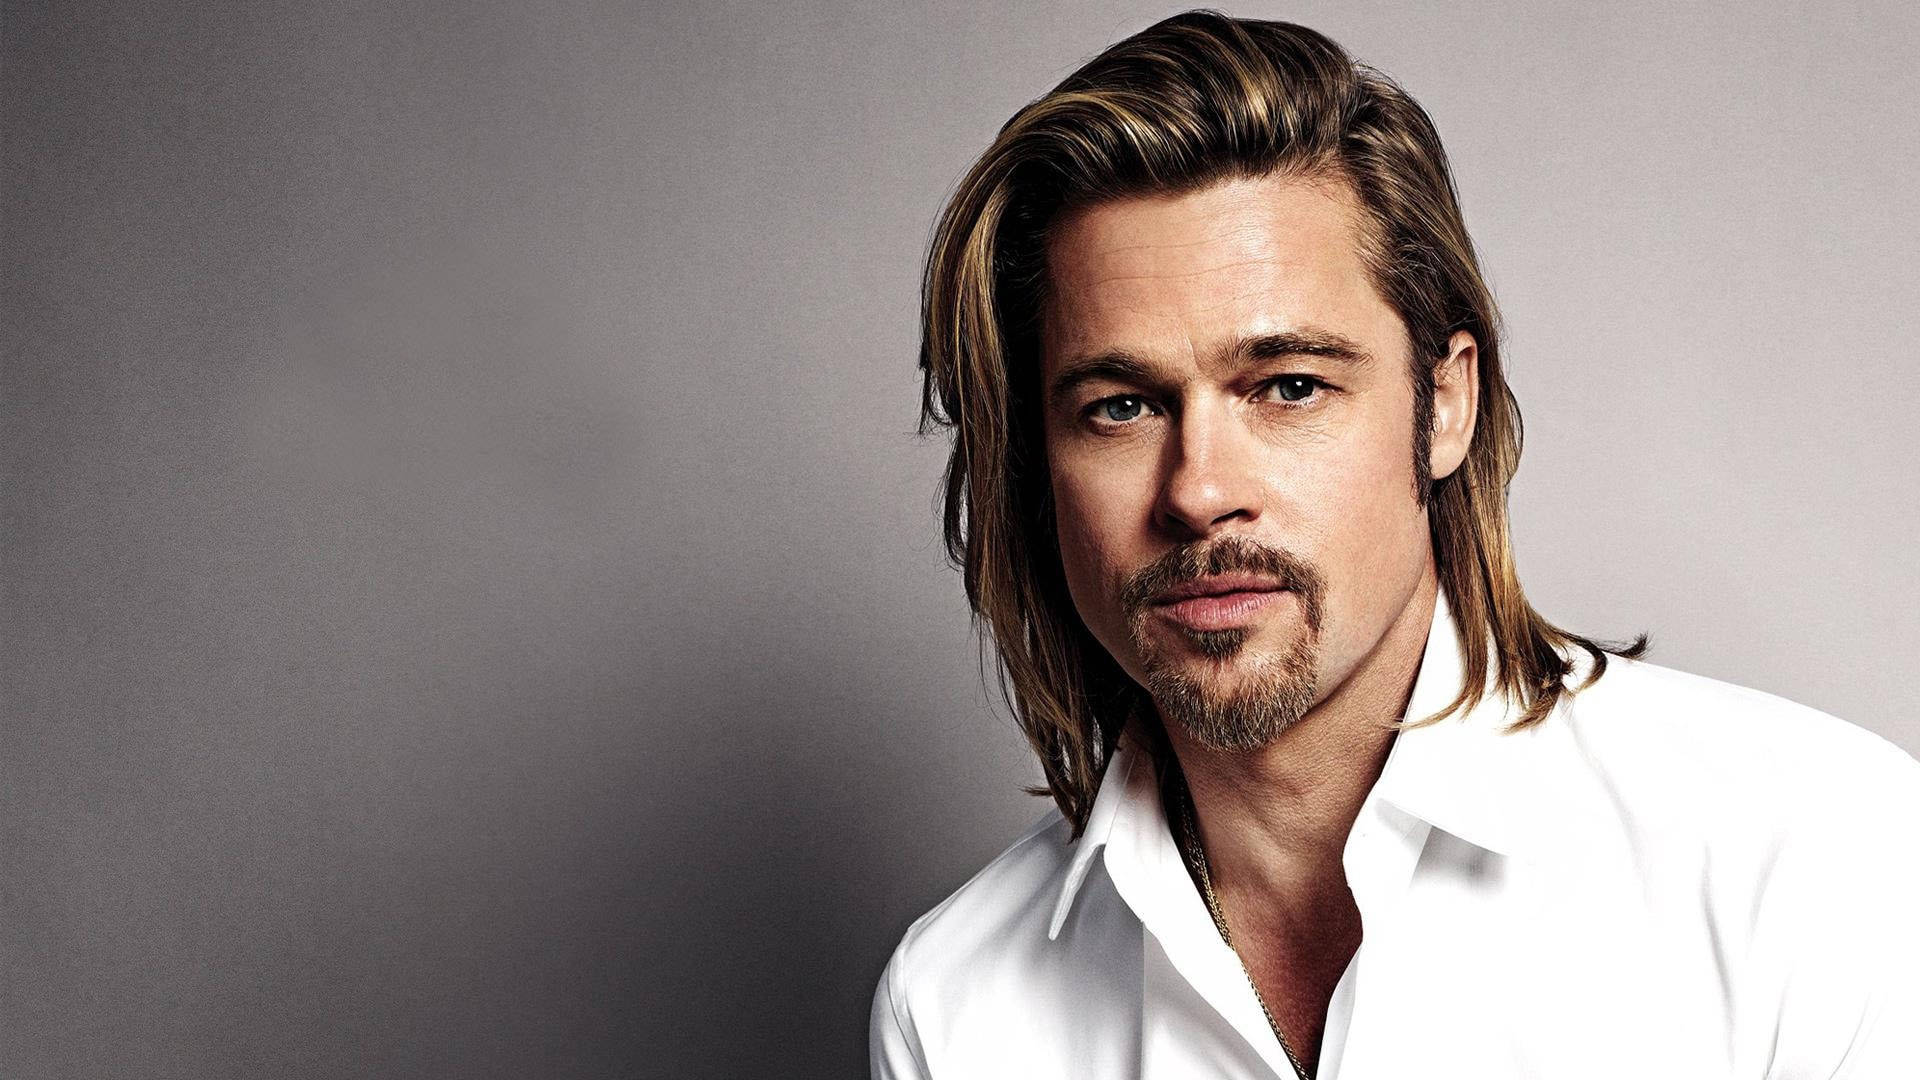 Free Brad Pitt Wallpaper Downloads, [100+] Brad Pitt Wallpapers for FREE |  